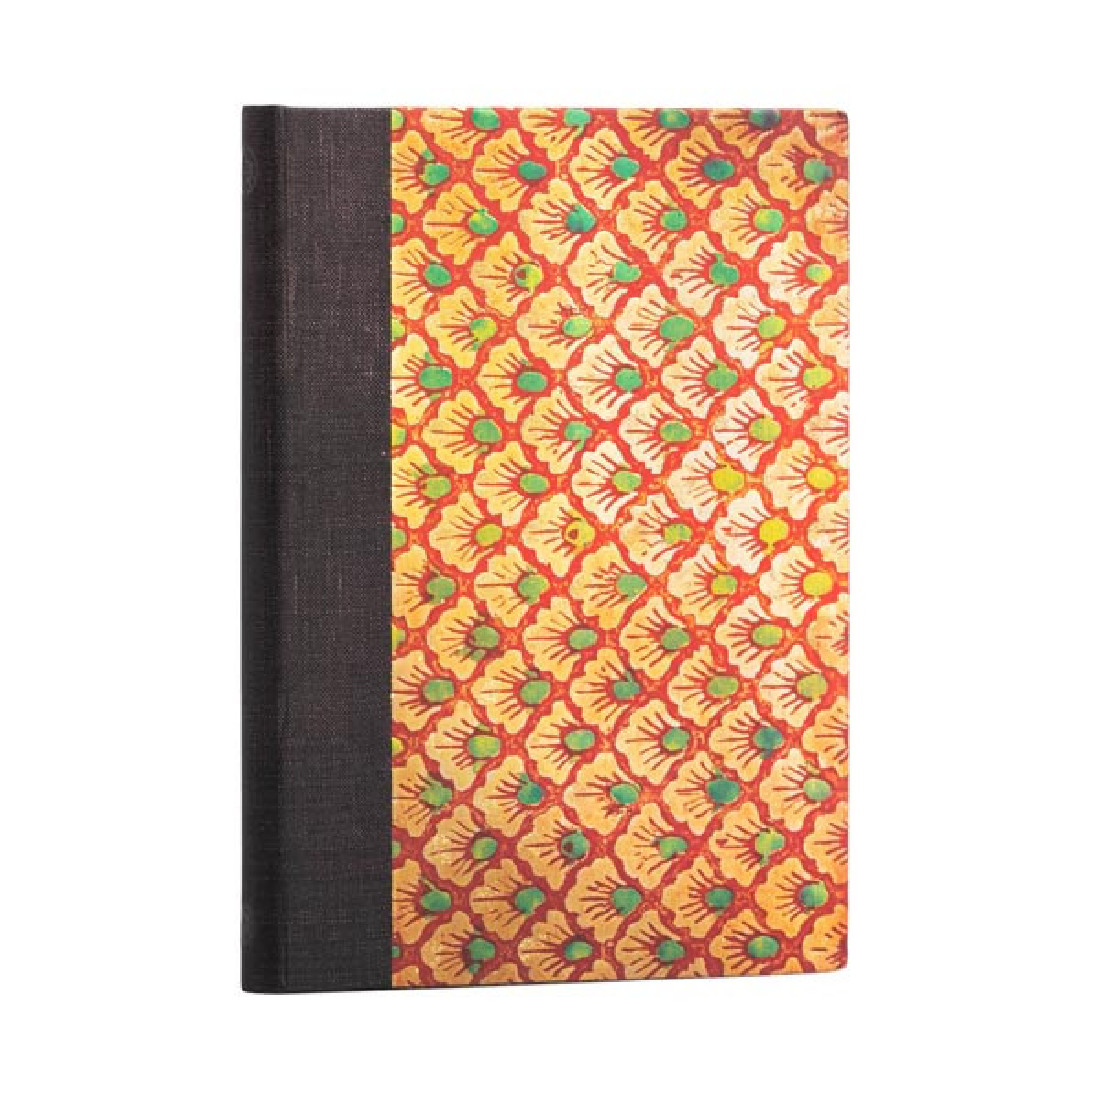 Paperblanks Virginia Woolfs, The Waves (Volume 3) Midi 18X13 lined notebook